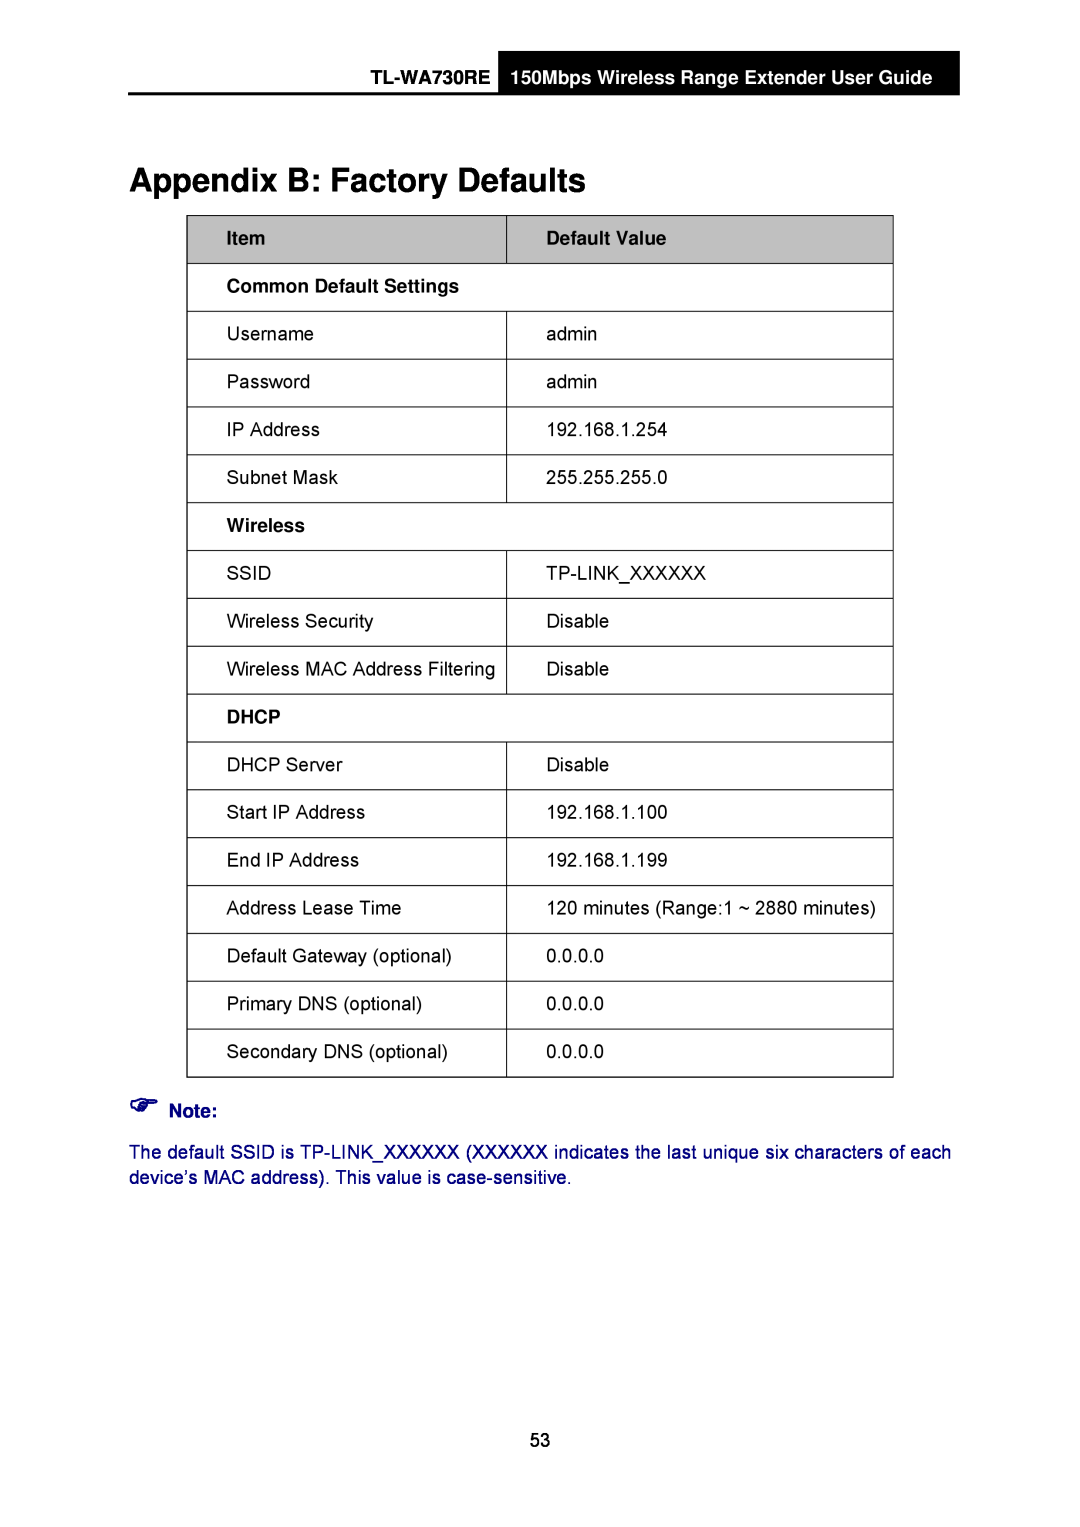 TP-Link manual Appendix B Factory Defaults, TL-WA730RE 150Mbps Wireless Range Extender User Guide, Default Value, Dhcp 